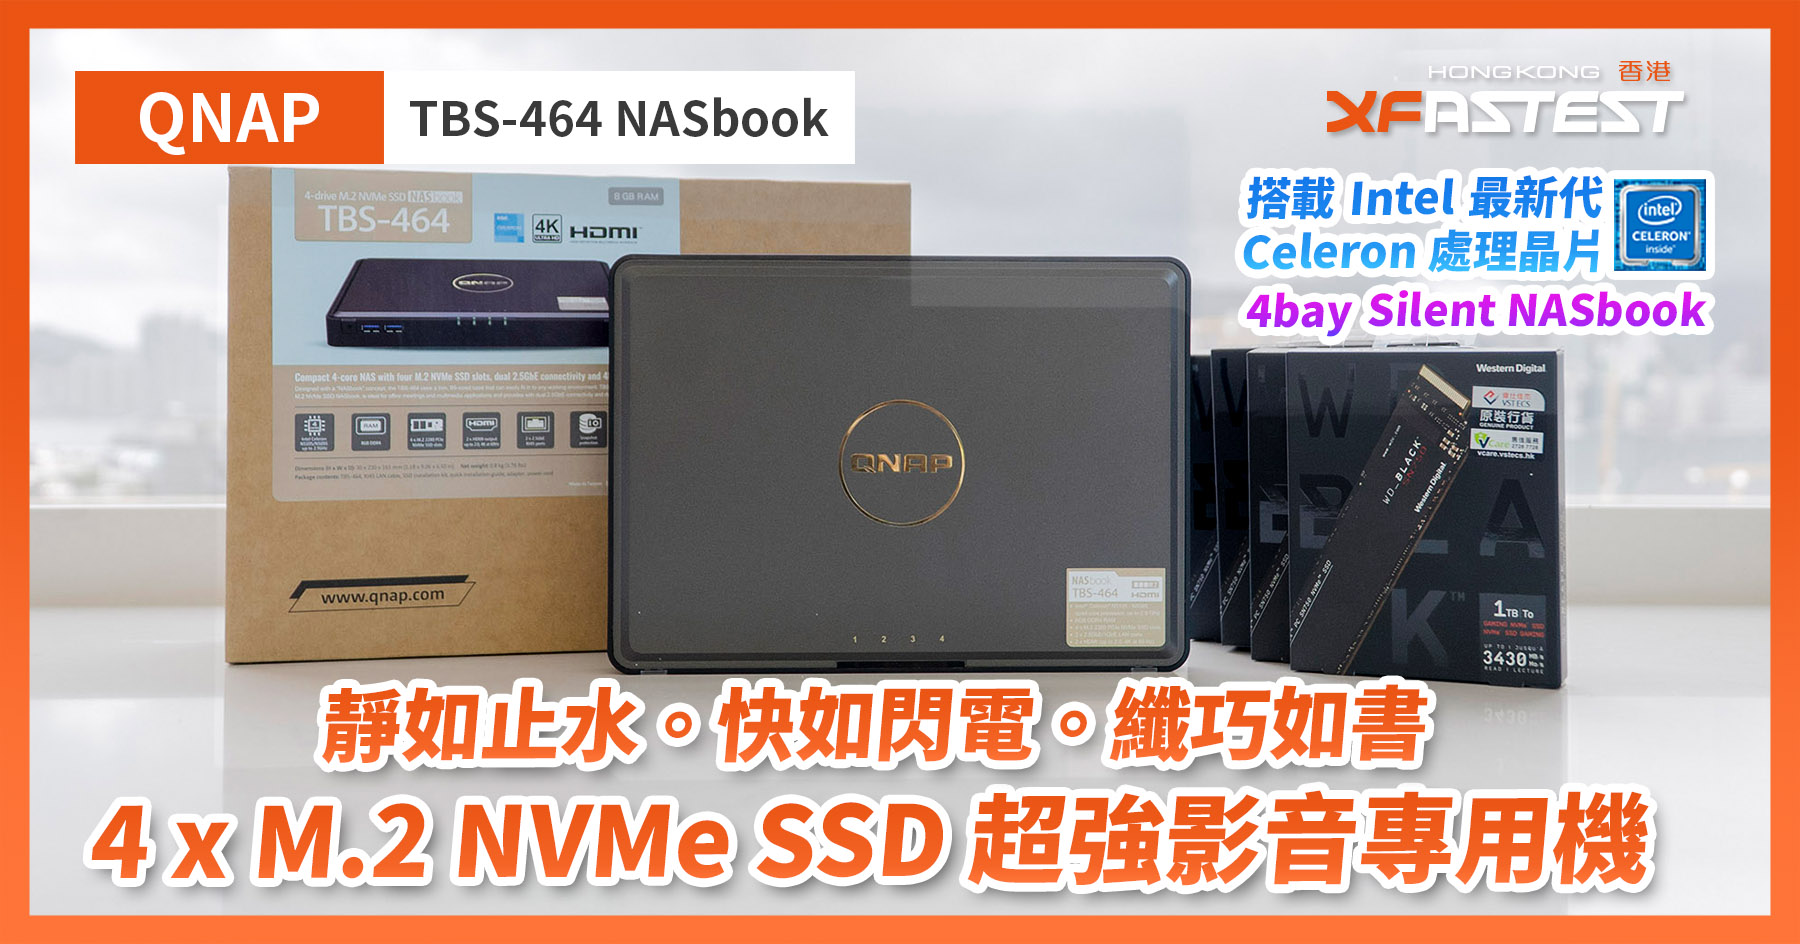 QNAP（キューナップ） TBS-464-8G TBS-464 M.2 NVMe SSD NASbook（M.2